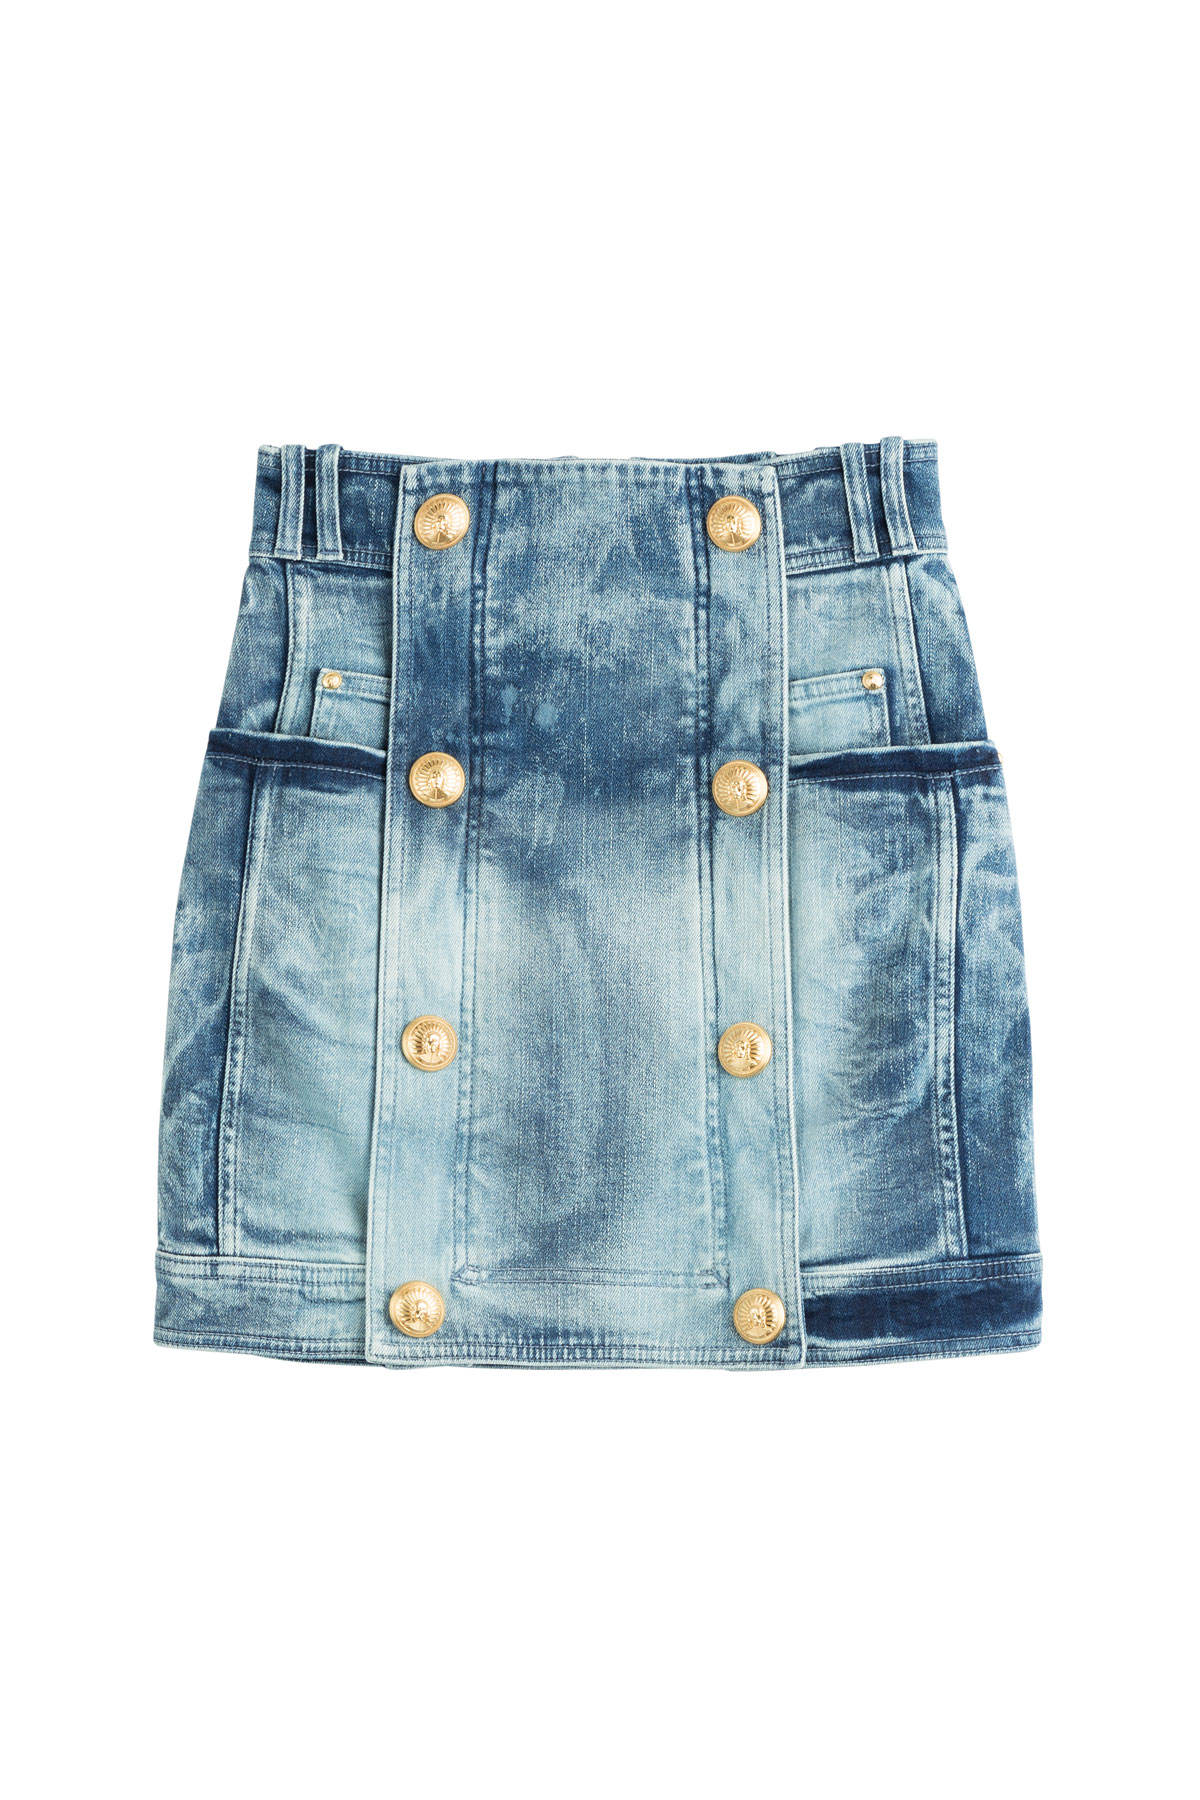 Lyst - Balmain Denim Skirt With Gold-Tone Buttons in Blue